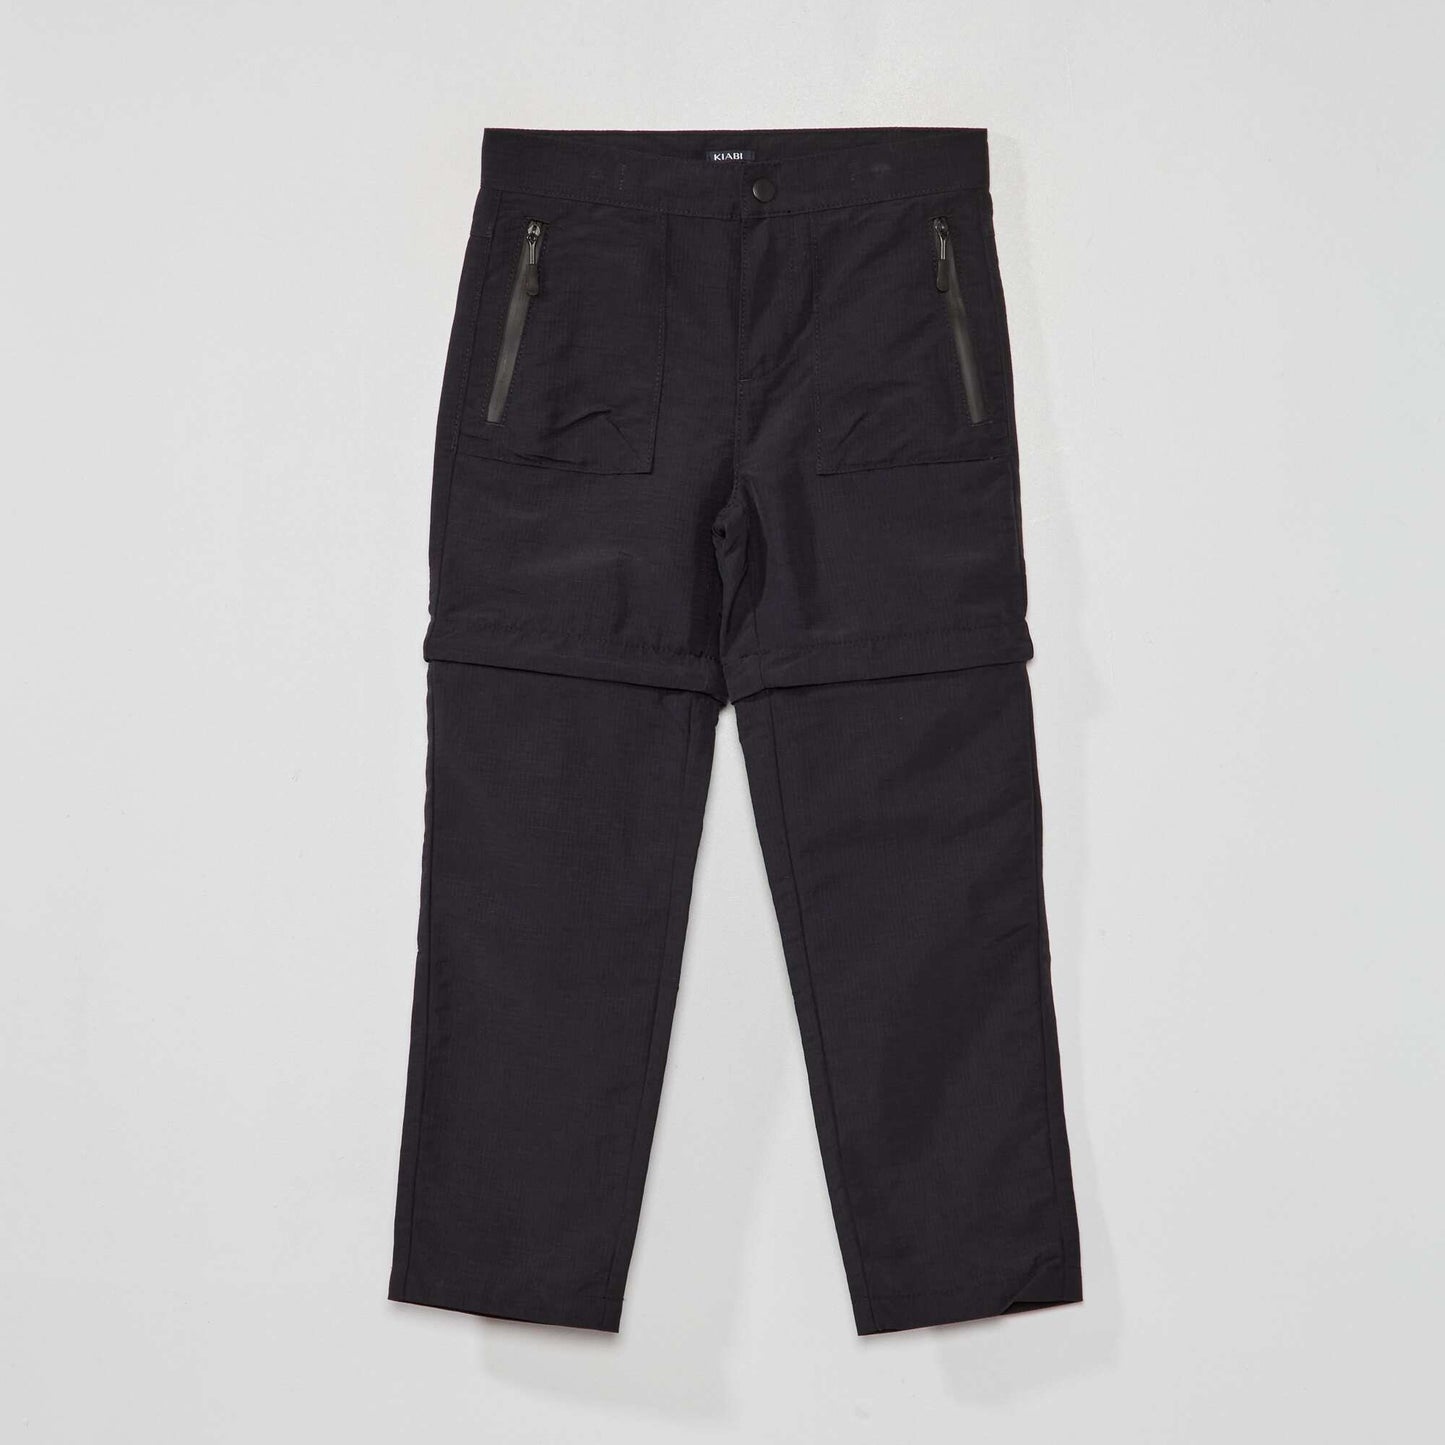 Pantalon/short 2 en 1 noir